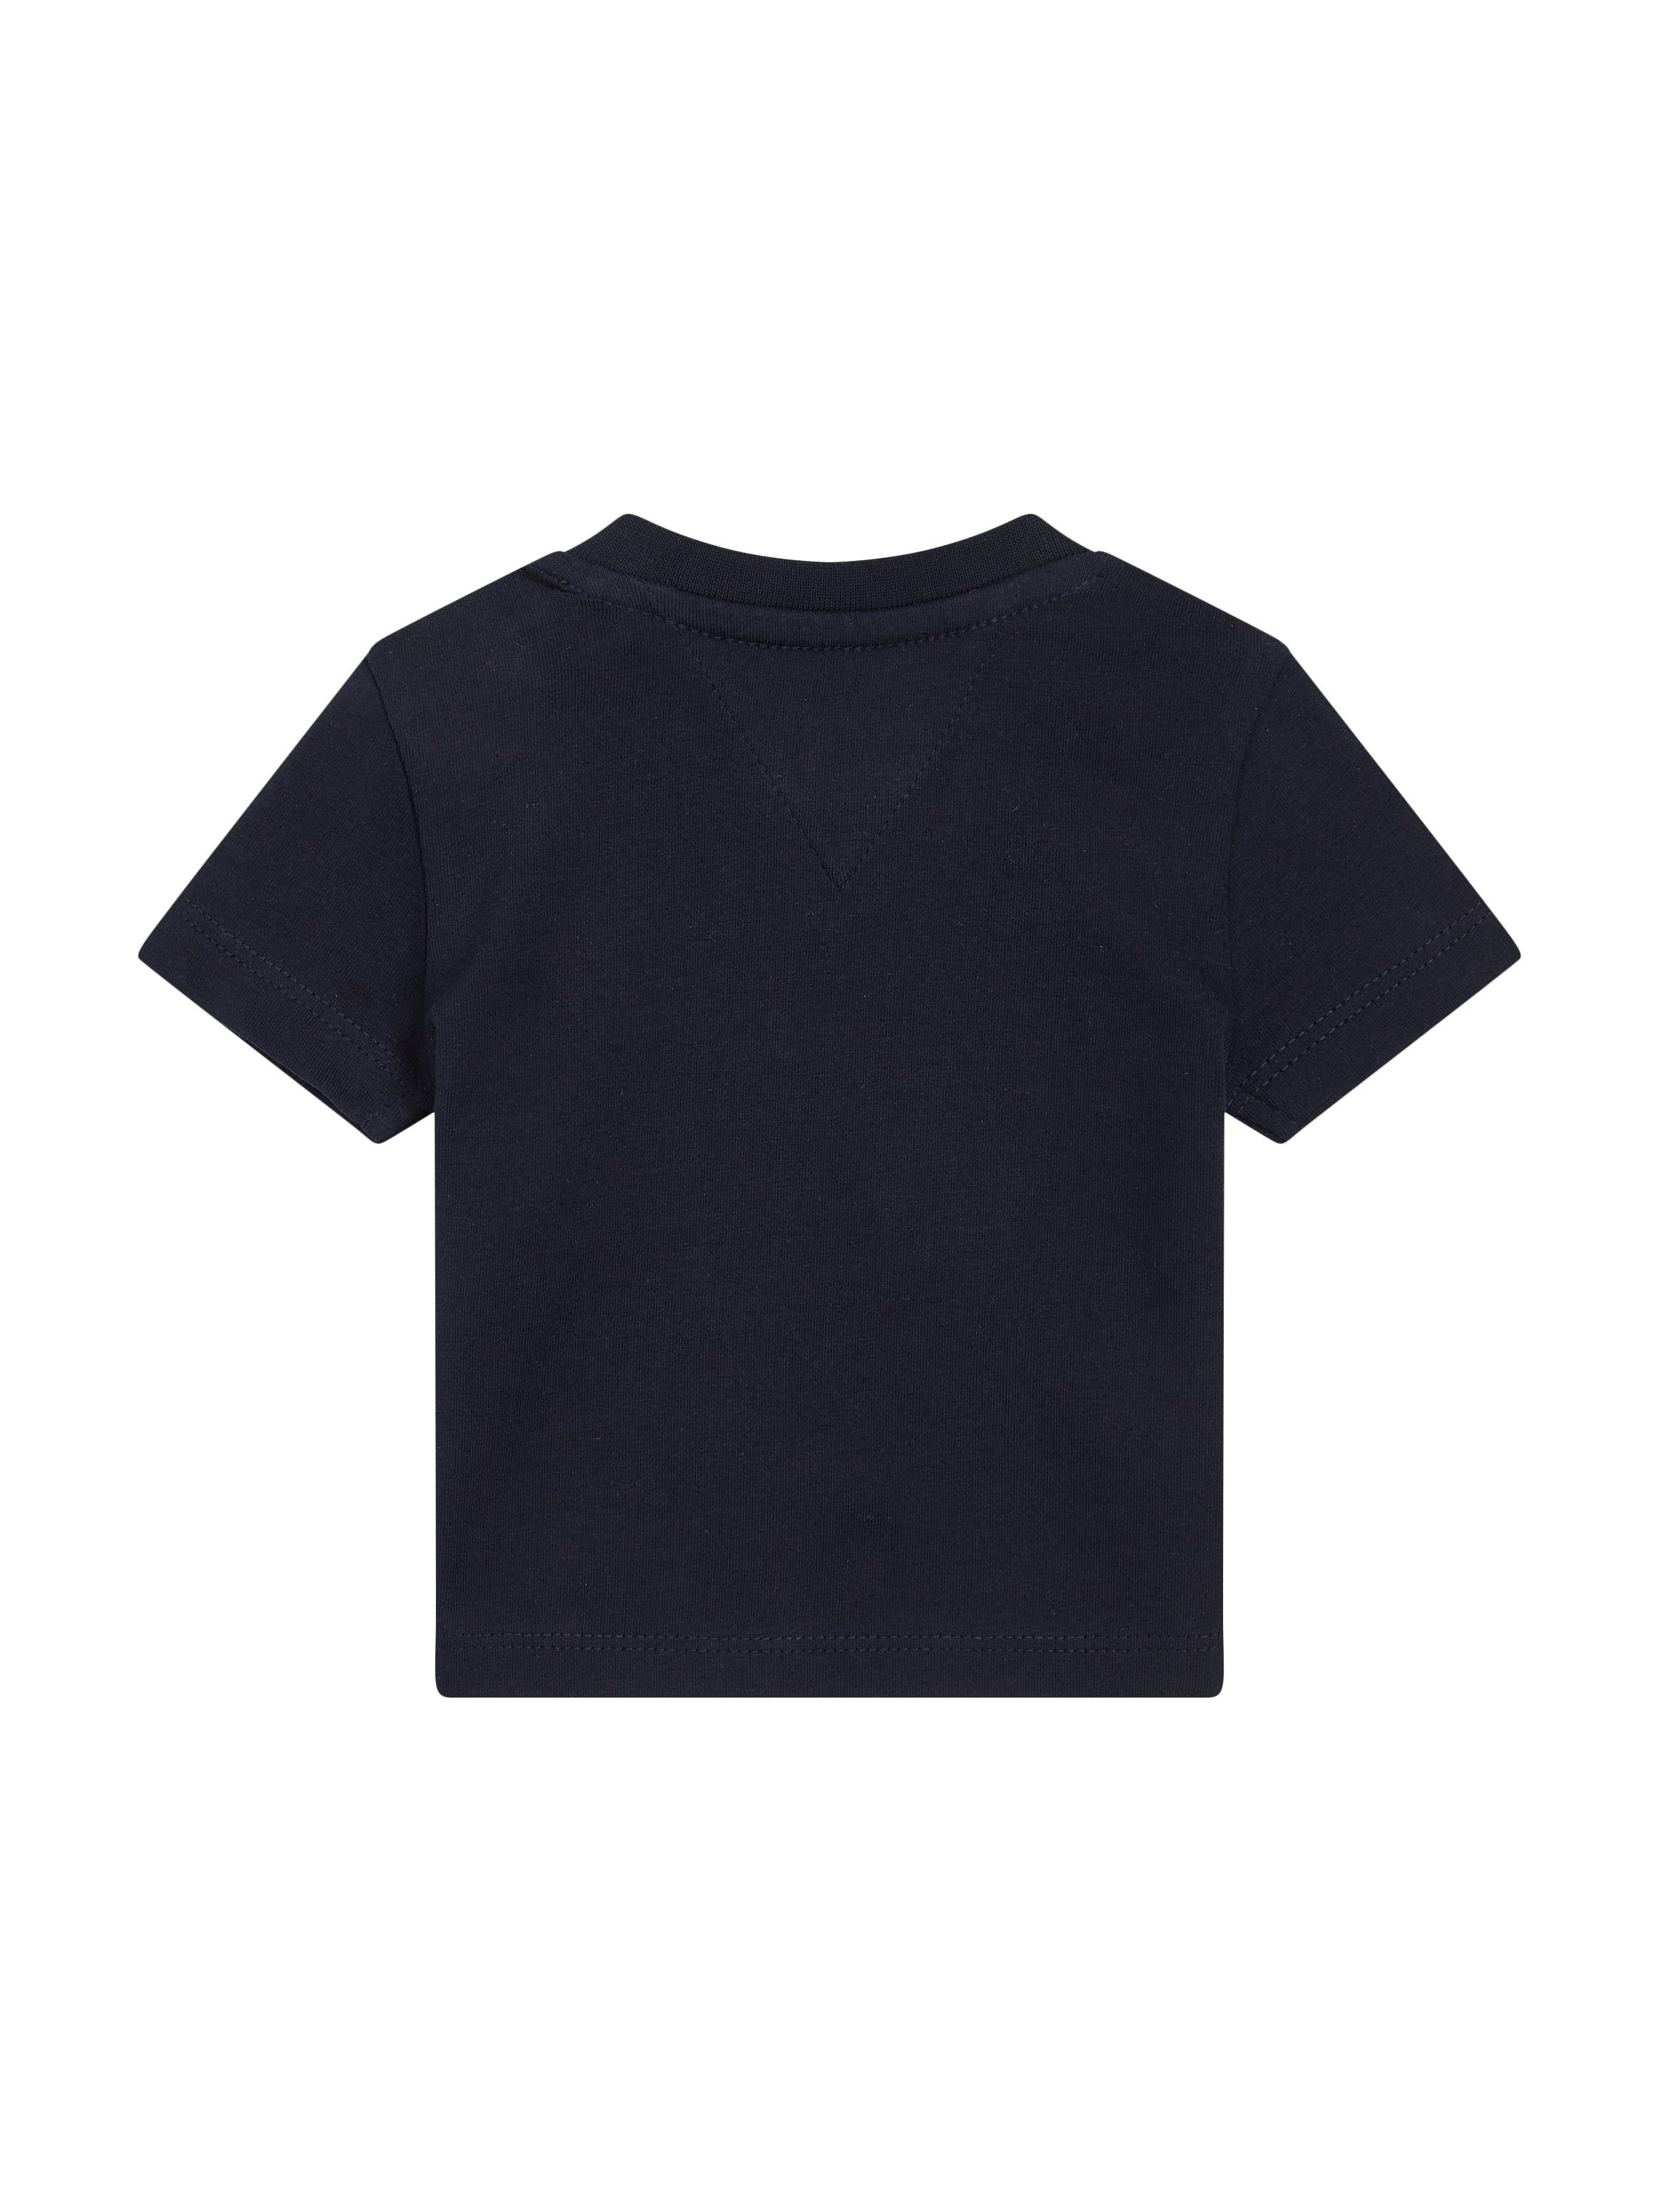 Sky T-Shirt LOGO TH BABY großem S/S Tommy Desert TEE Hilfiger Logo mit